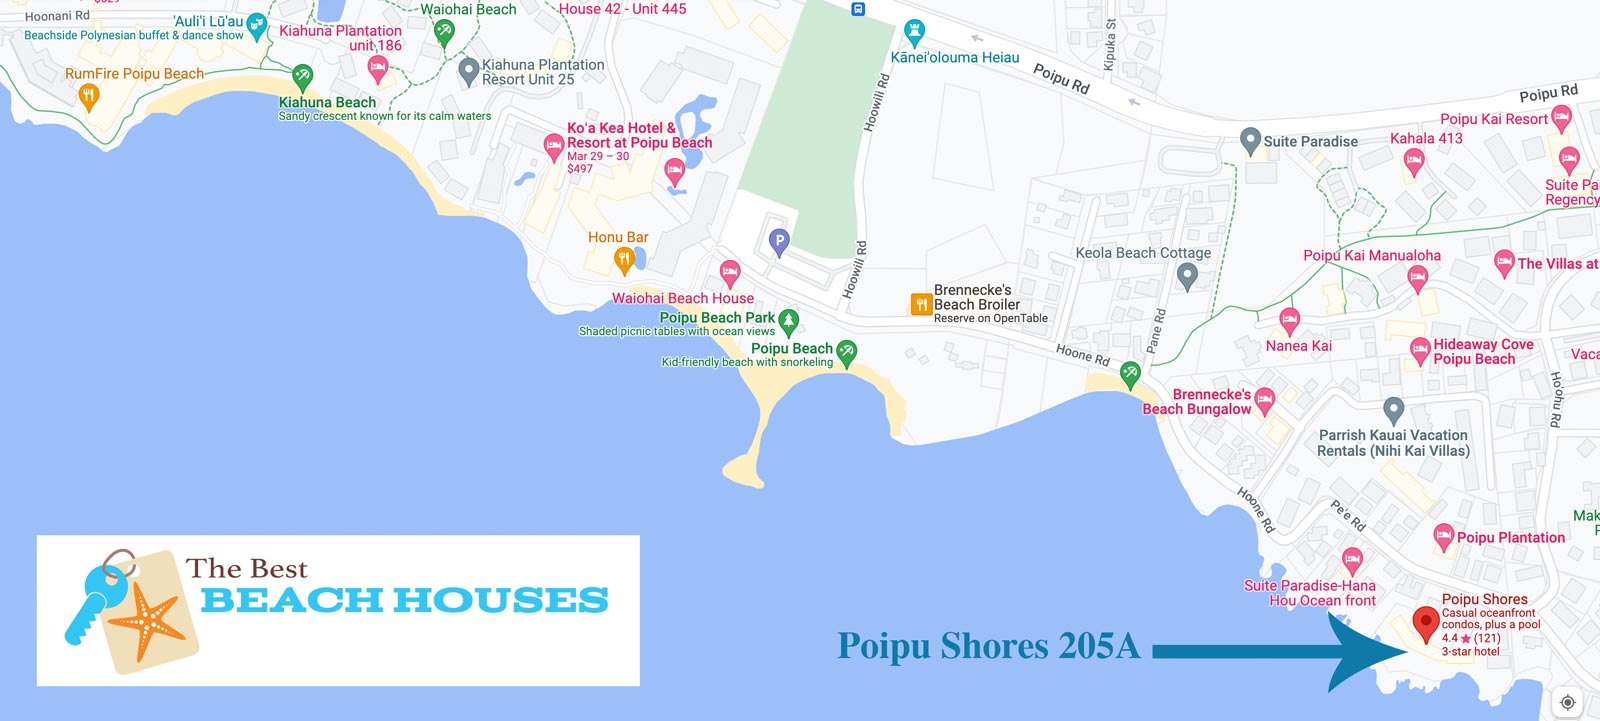 Poipu Shores 205A Kauai ocean front vacation rental area amenities map